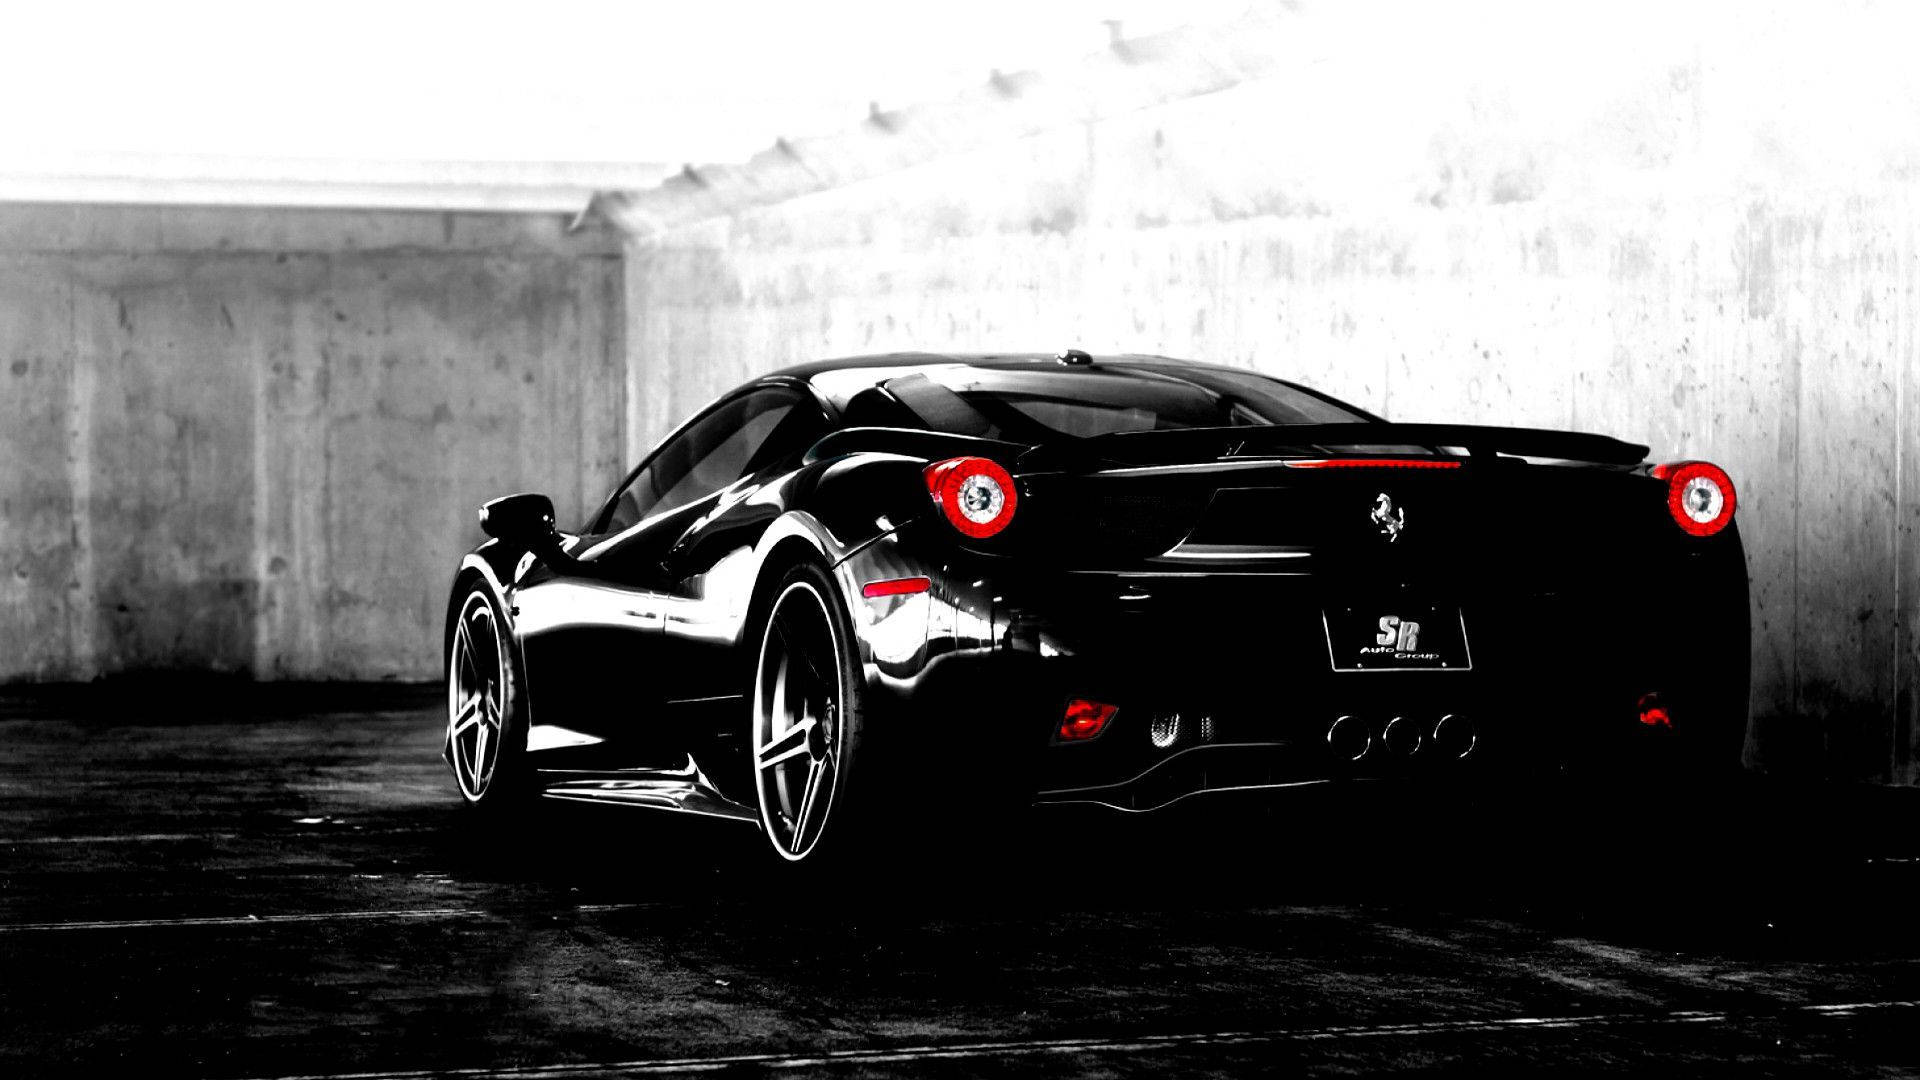 Black 1920x1080 Ferrari 458 Corner Parking Lot Wallpaper